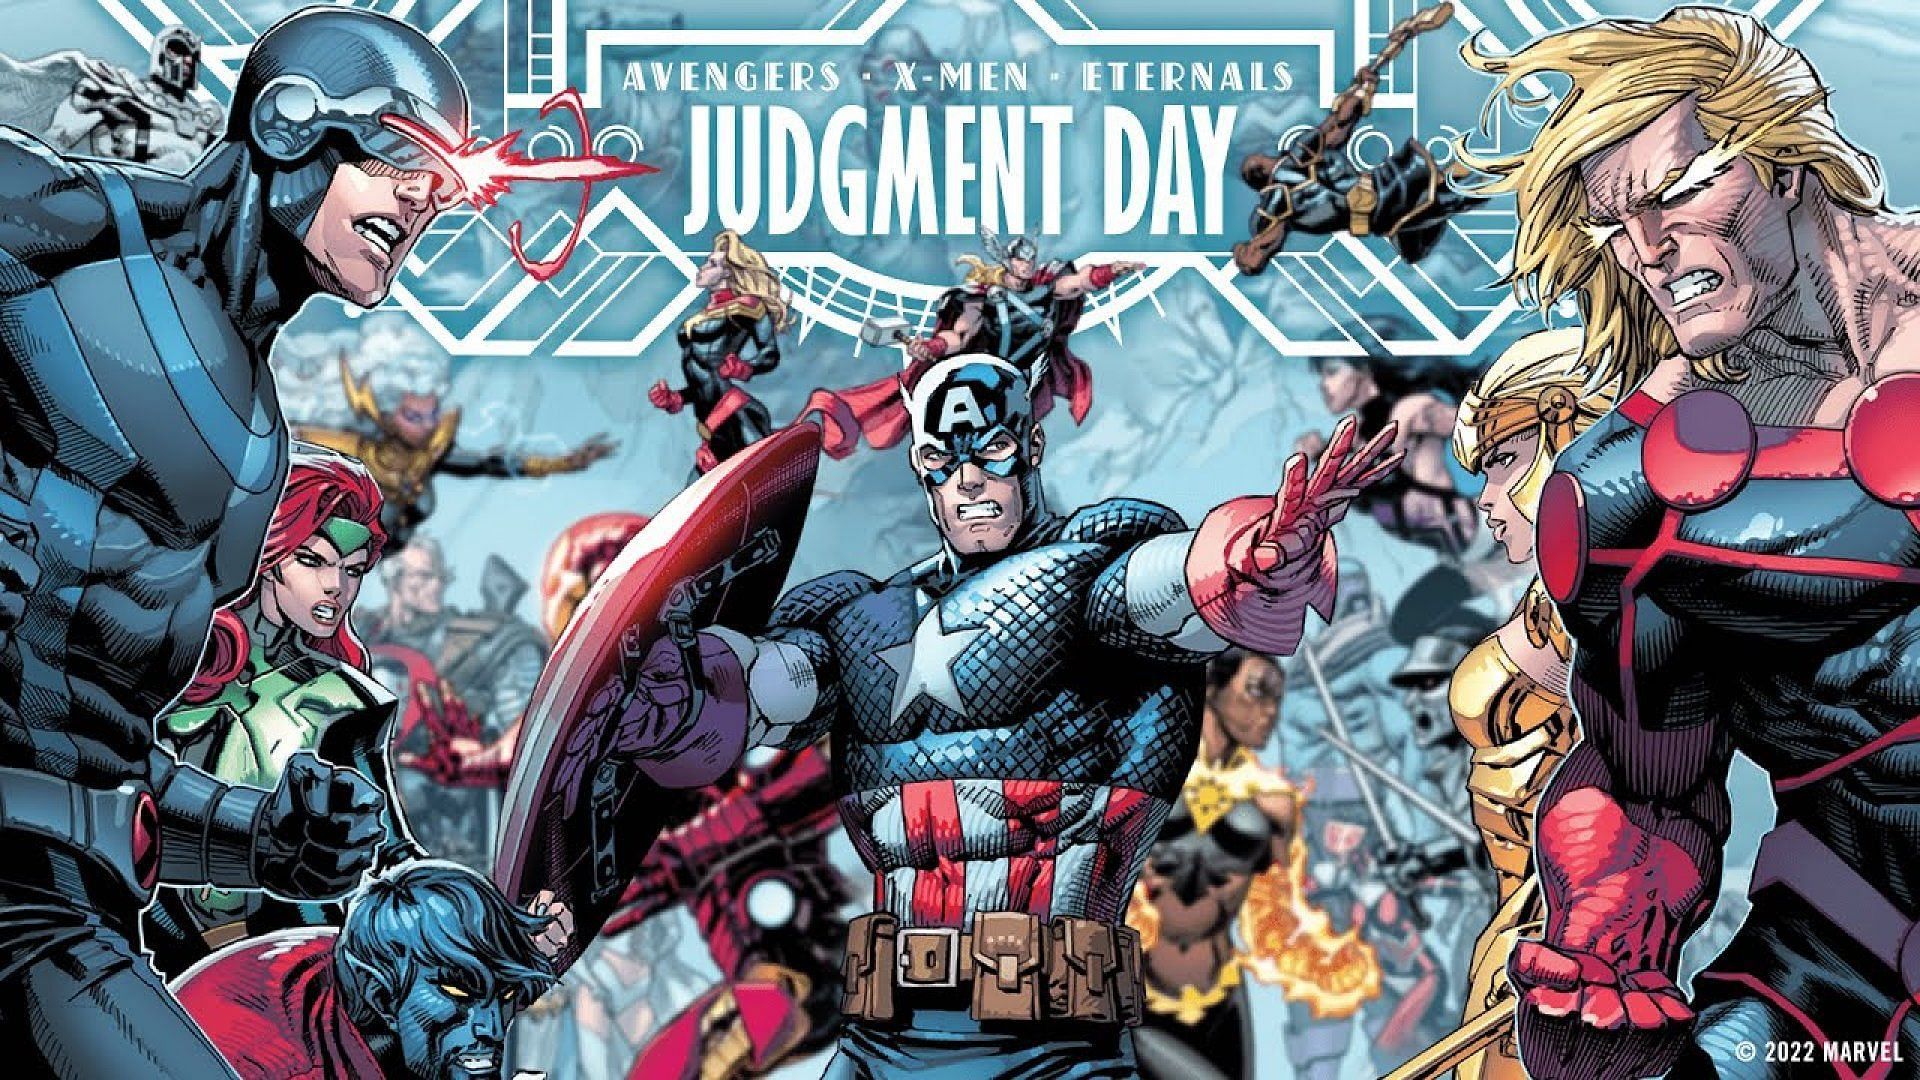 Judgment Day series (Image via Marvel Comics)